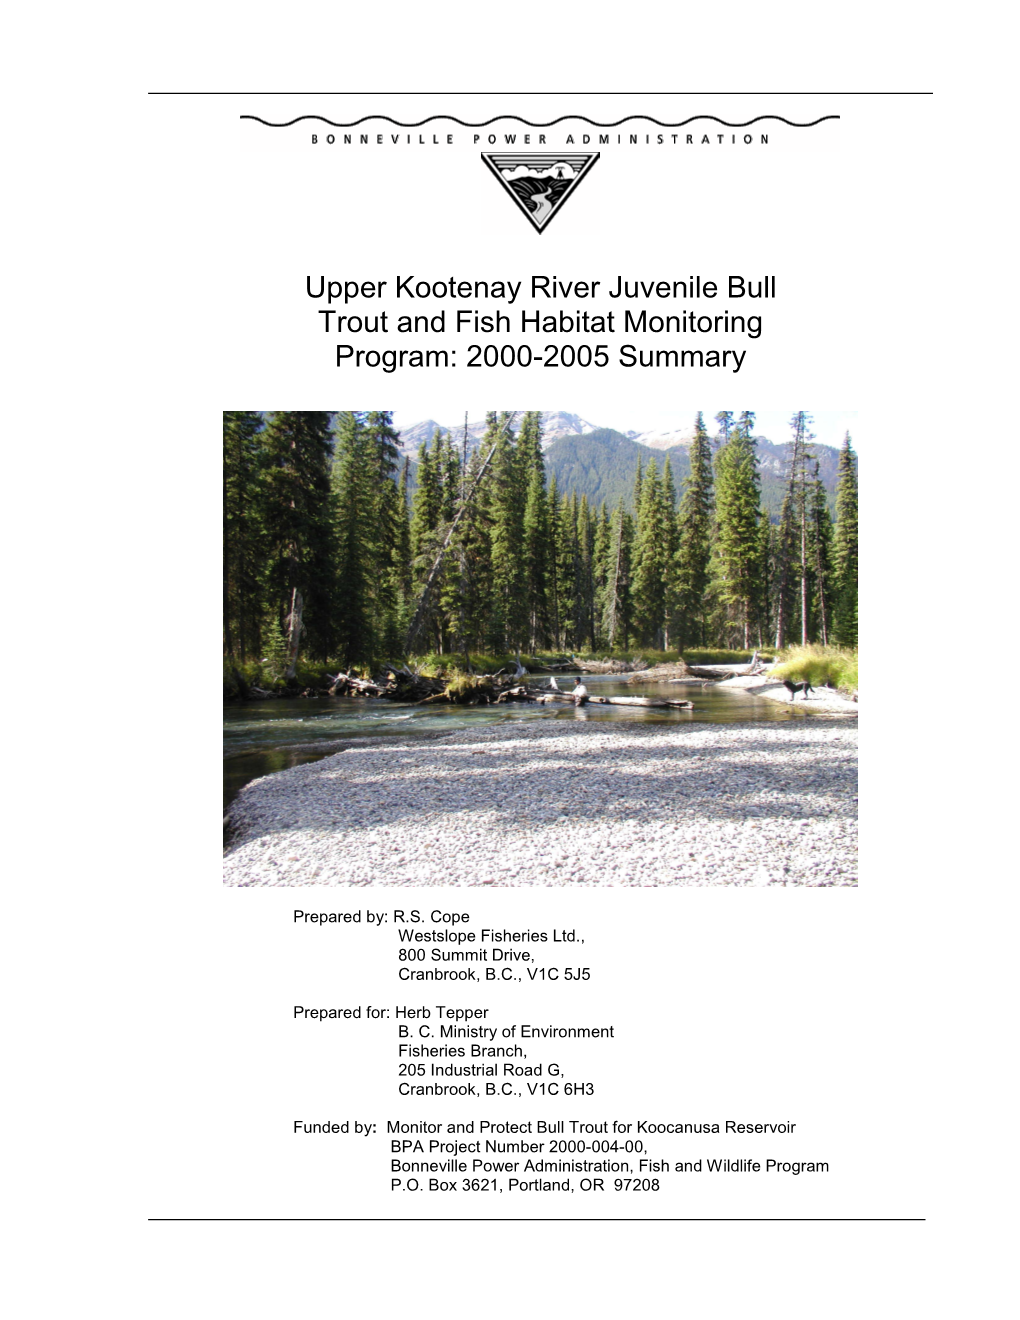 Upper Kootenay River Juvenile Bull Trout and Fish Habitat Monitoring Program: 2000-2005 Summary